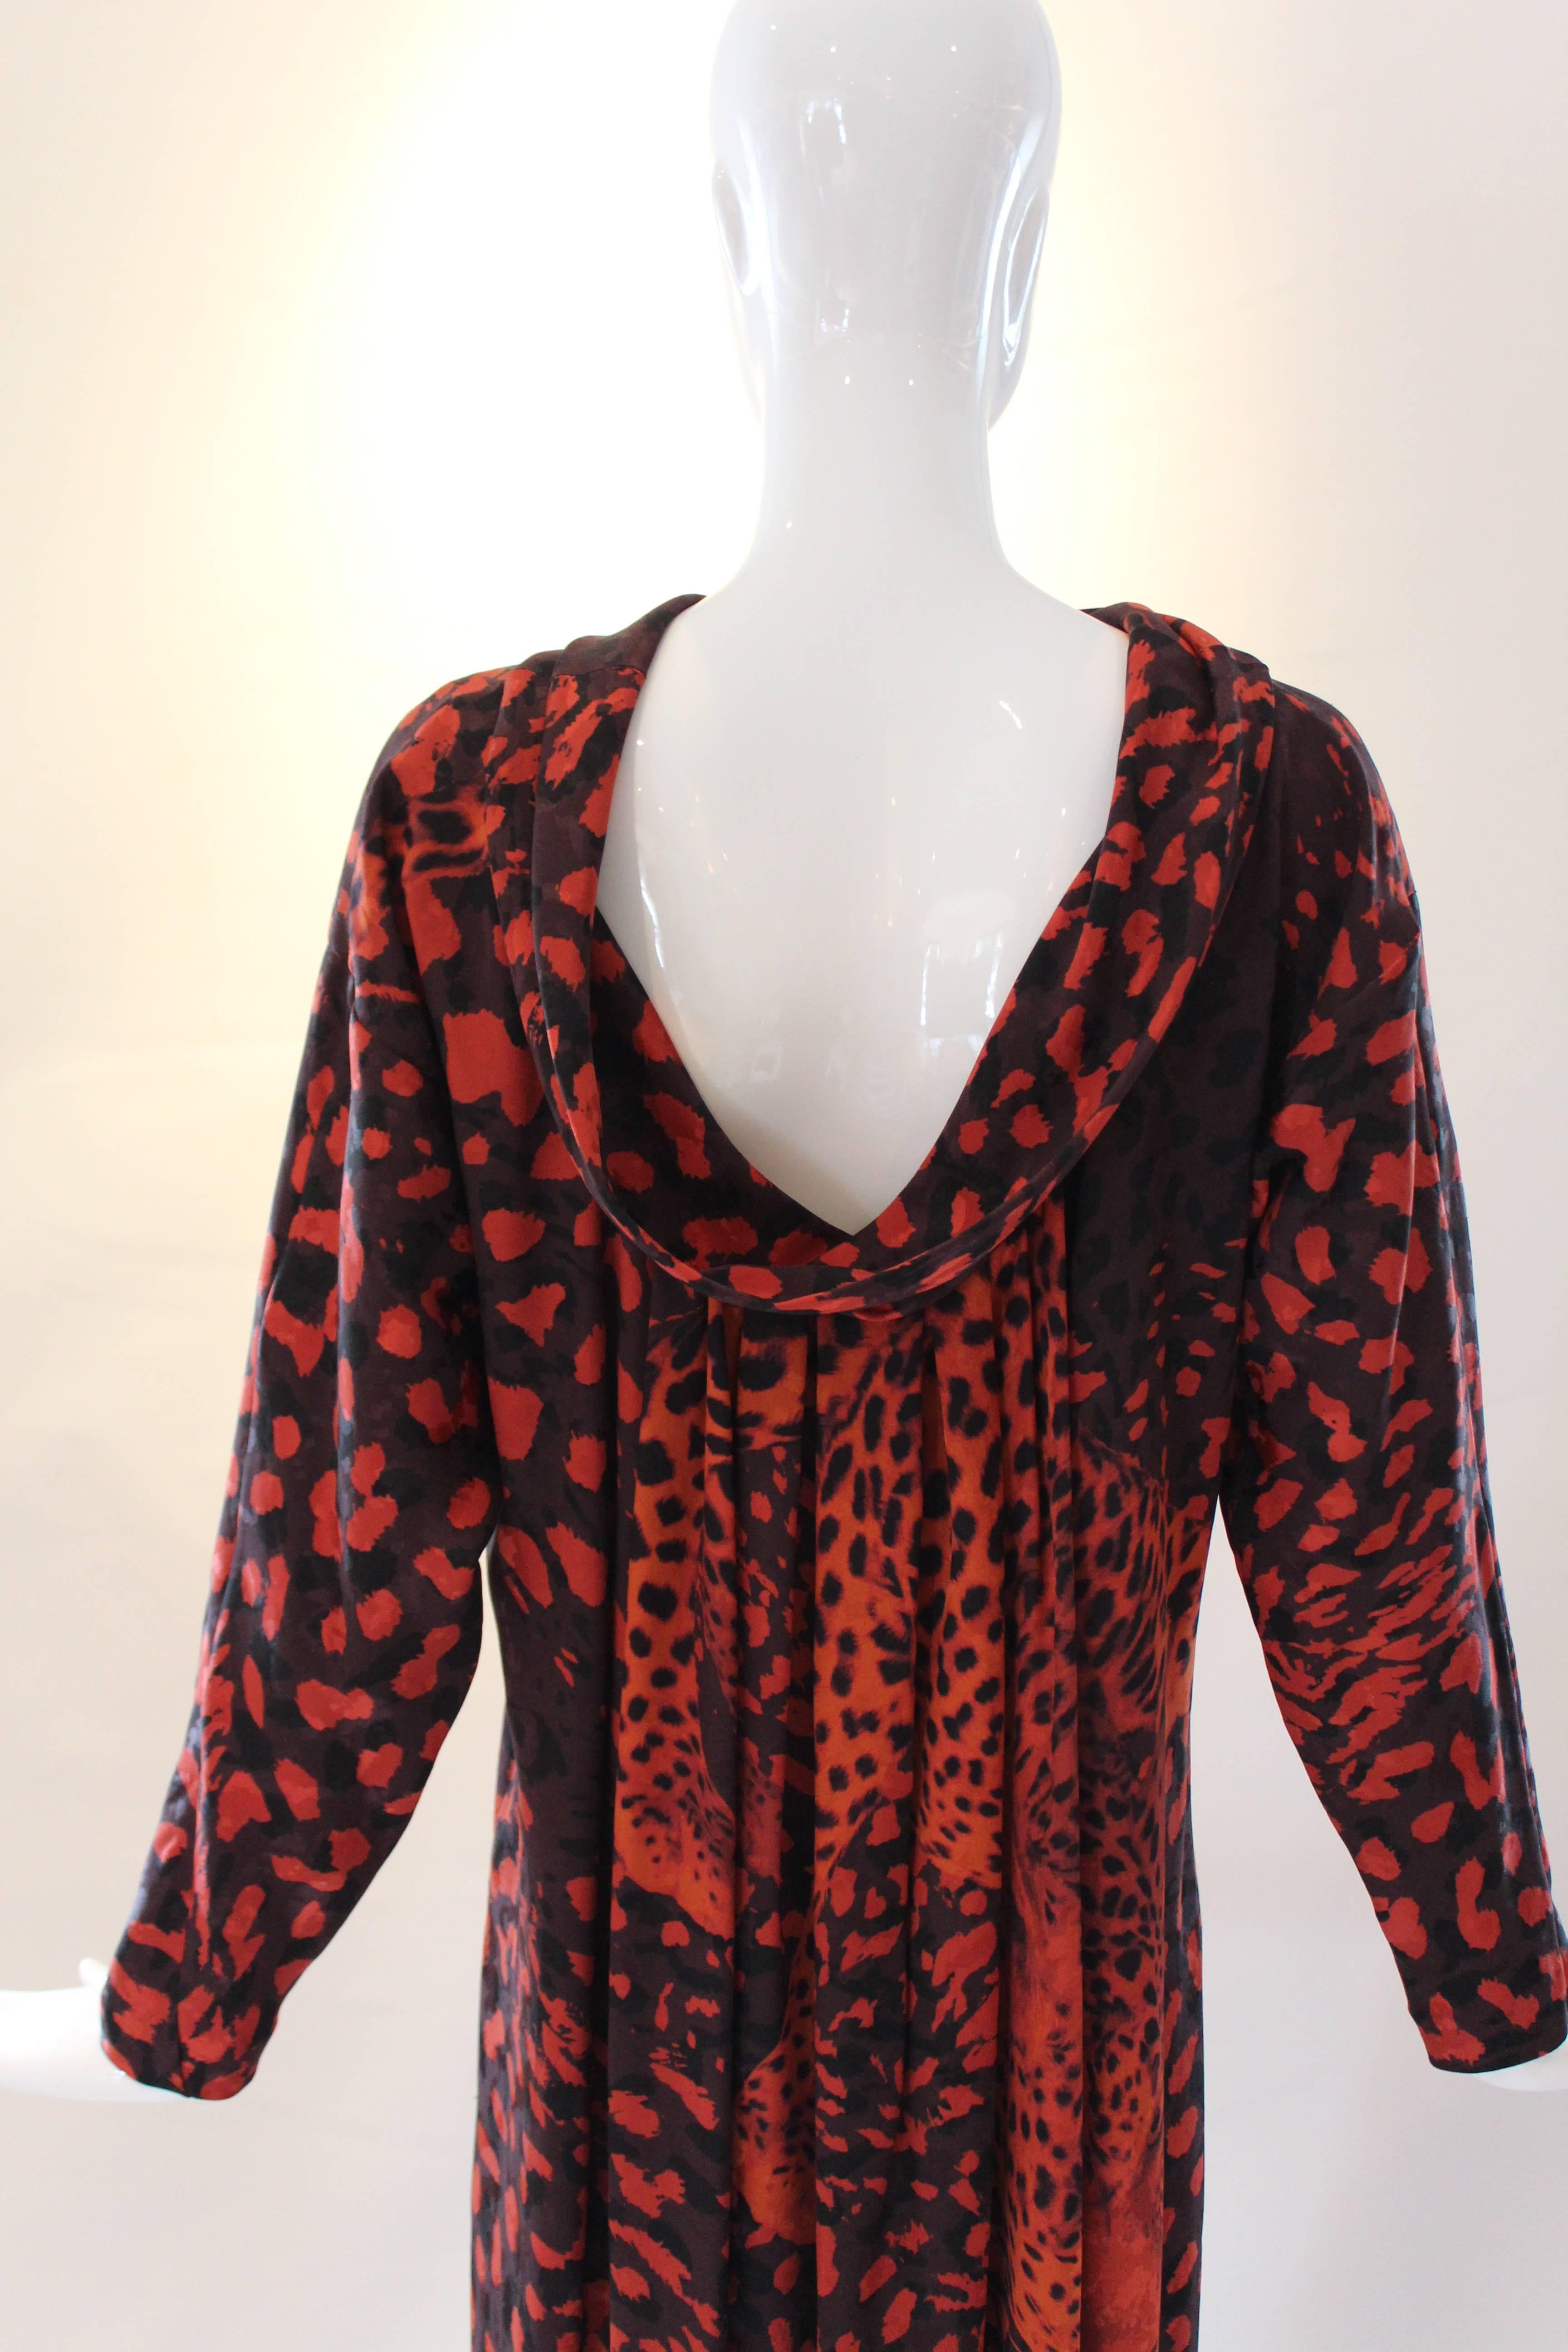 Hermes Leopard Print Dress 3